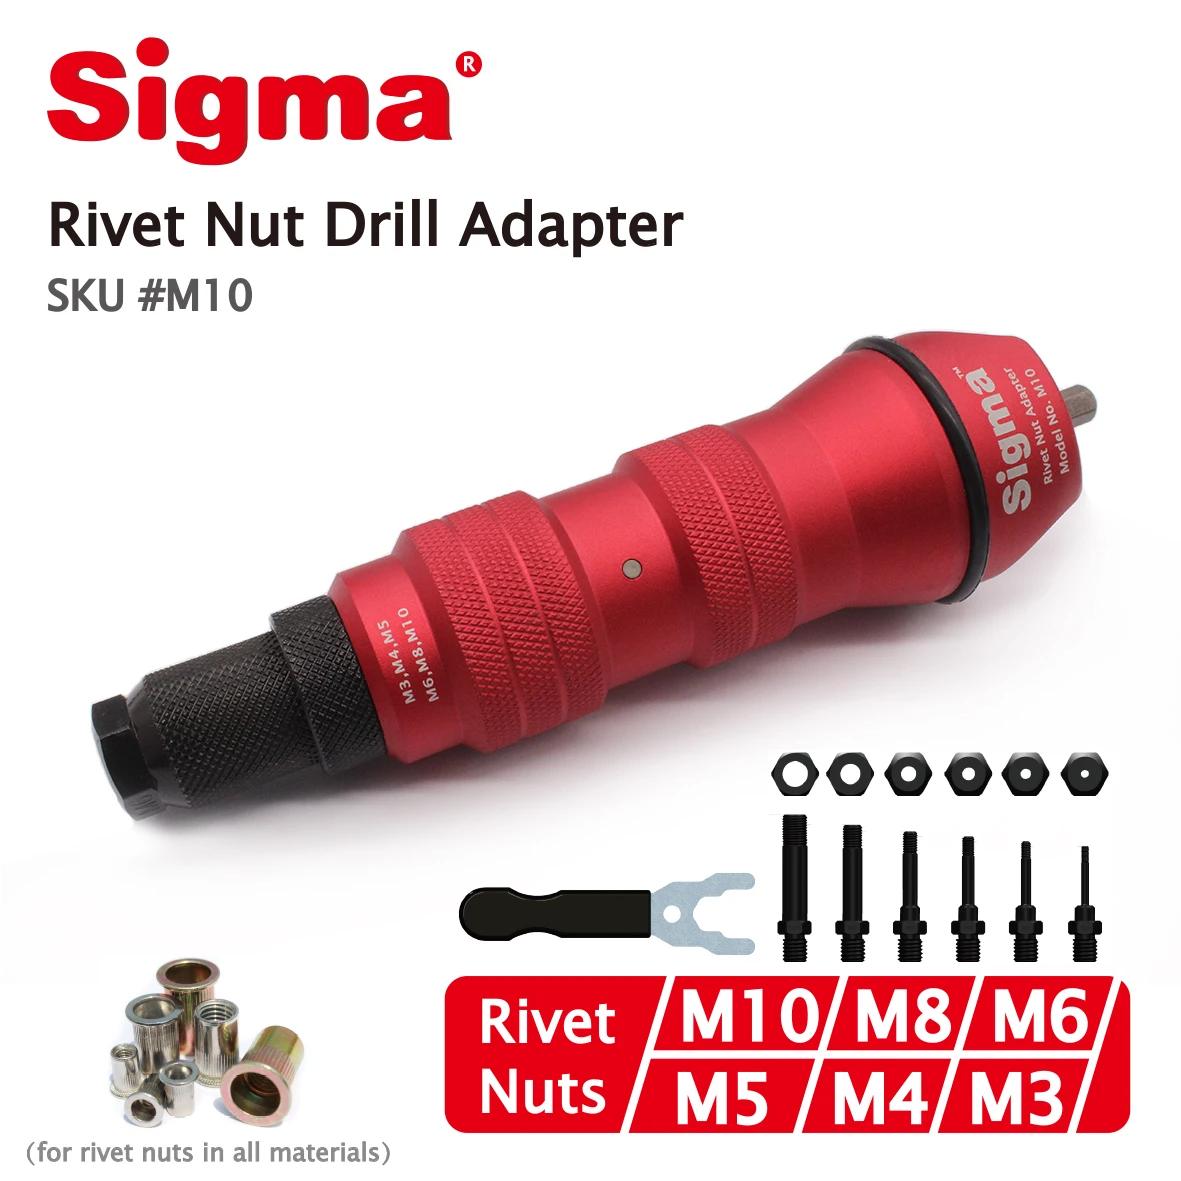 sigma-m10-heavy-duty-threaded-rivet-nut-drill-adapter-cordless-or-electric-power-tool-accessory-alternative-air-rivet-nut-gun